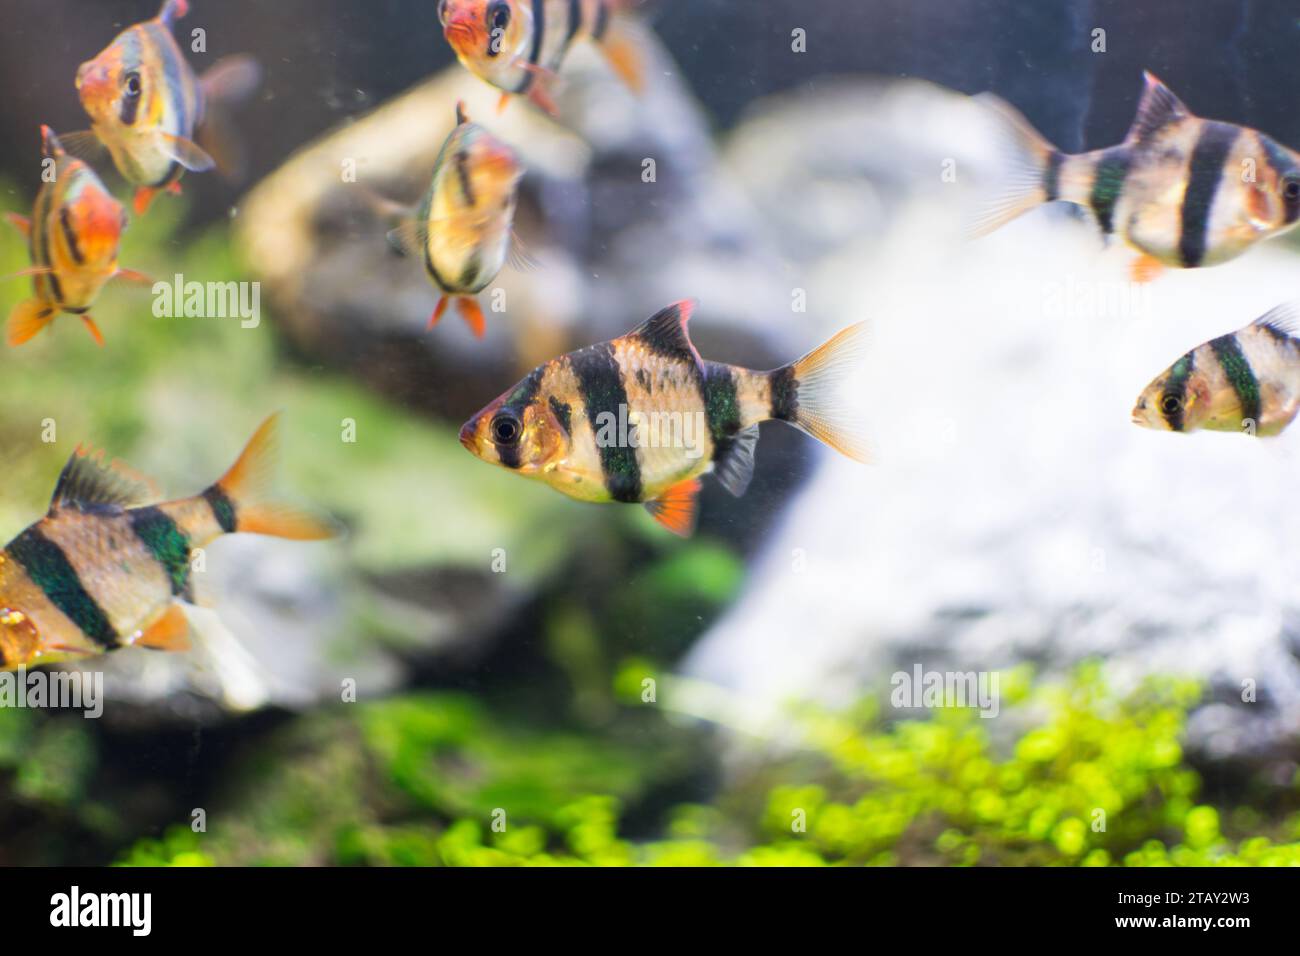 Sumatran barb in the aquarium, close-up view of the fish Stock Photo